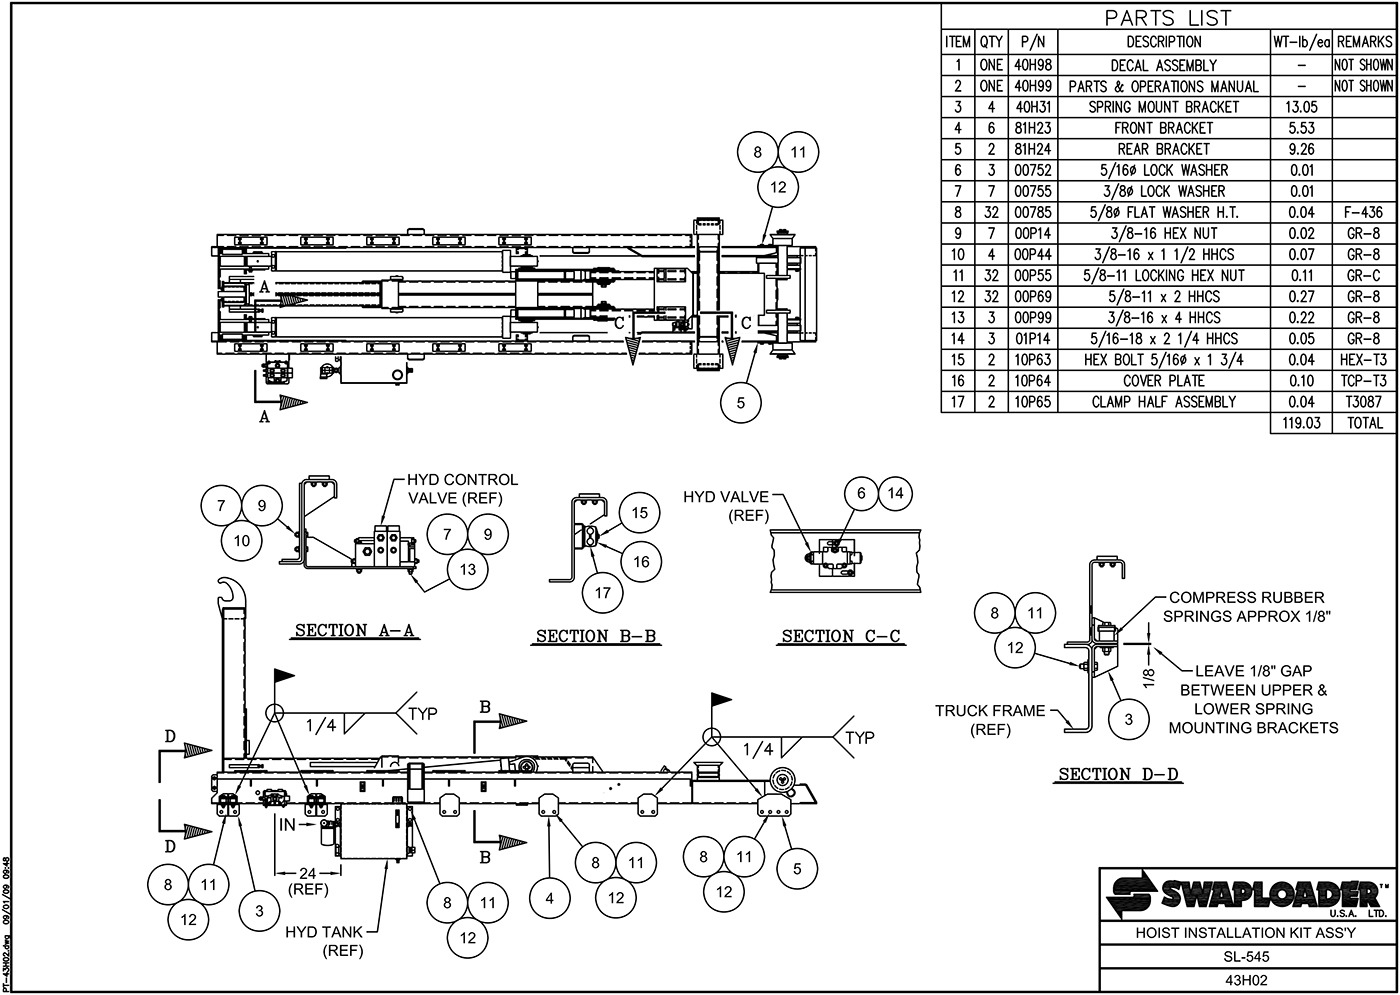 SL-545 Hoist Installation Kit Assembly